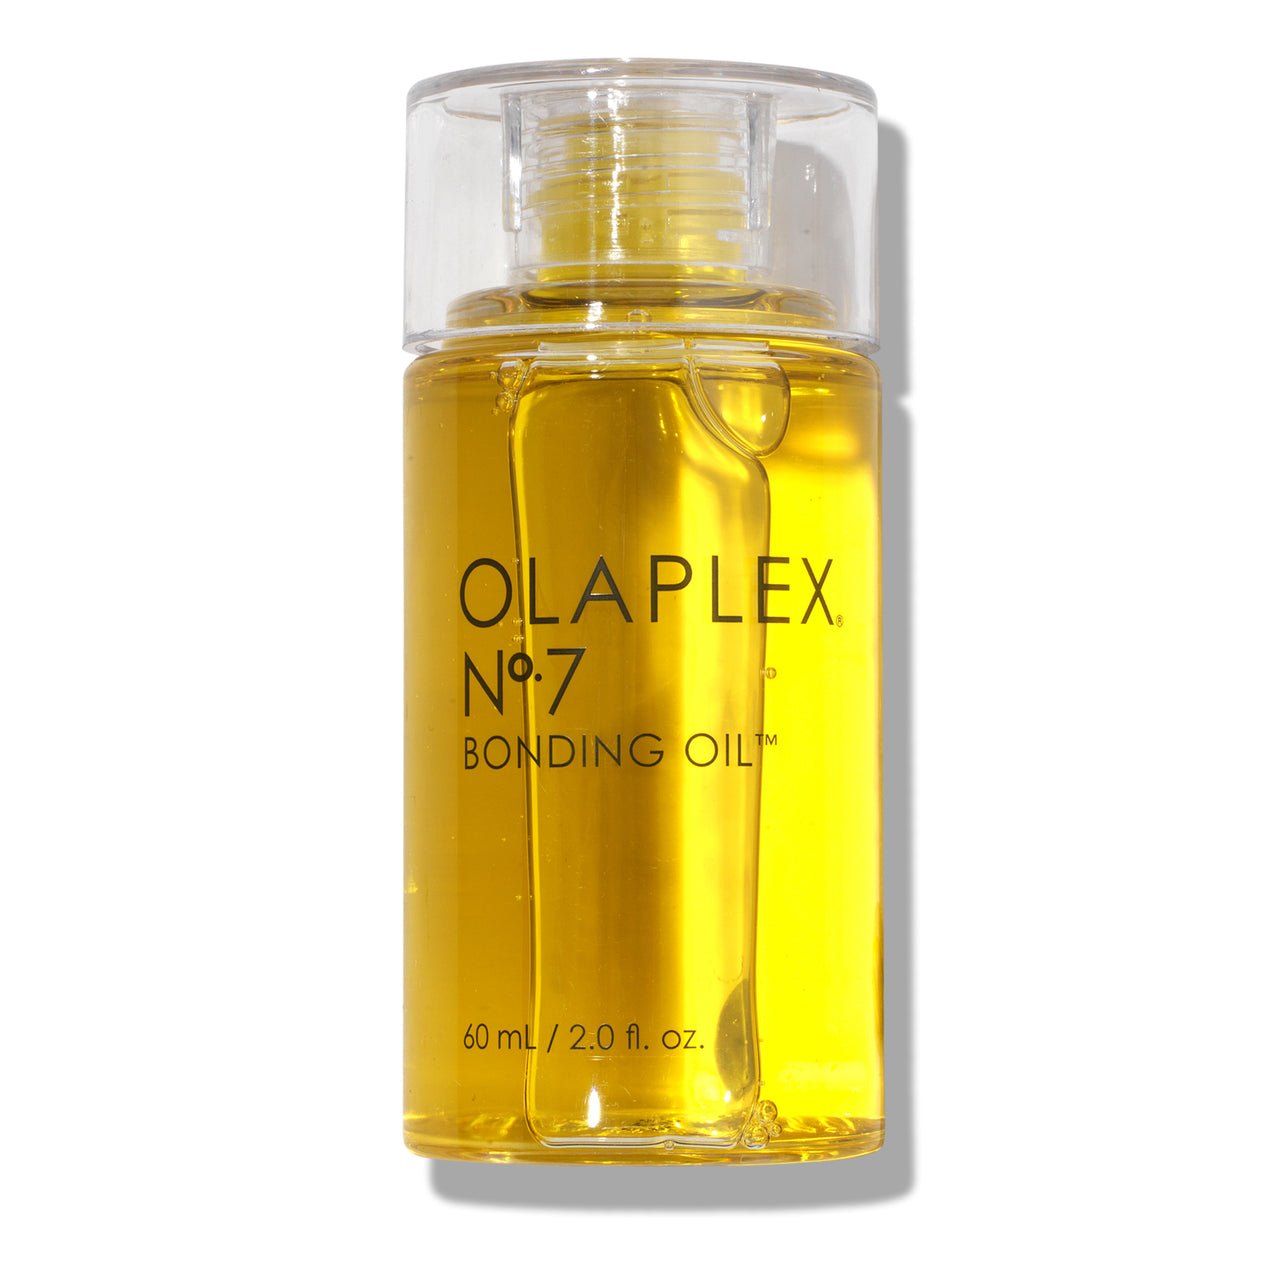 Olaplex No.7 Bonding Oil 60ml Deluxe Size